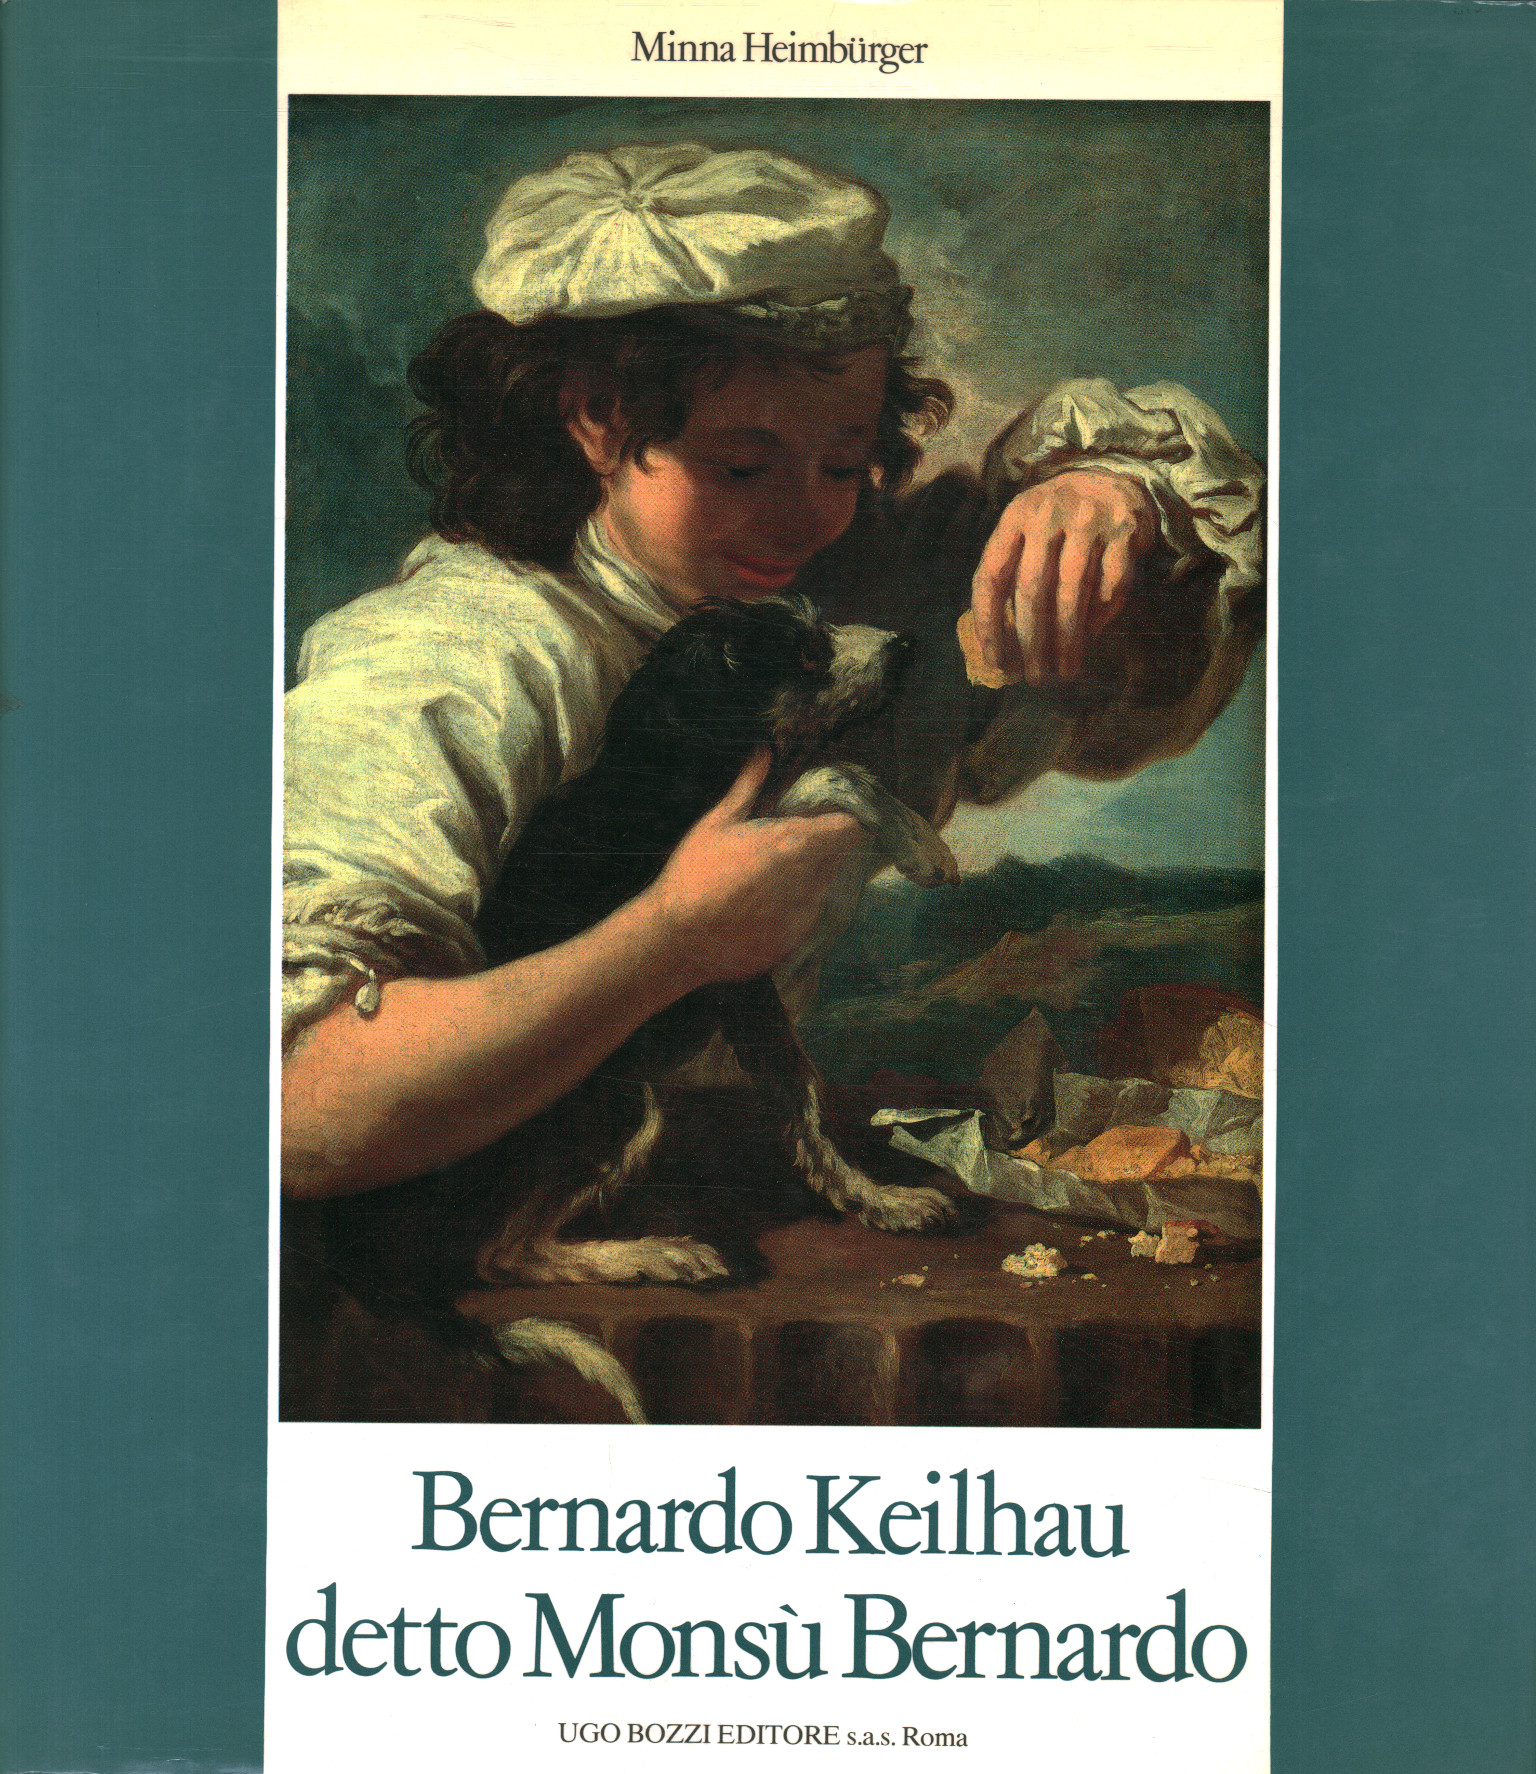 Bernardo Keilhau known as Monsù Bernardo